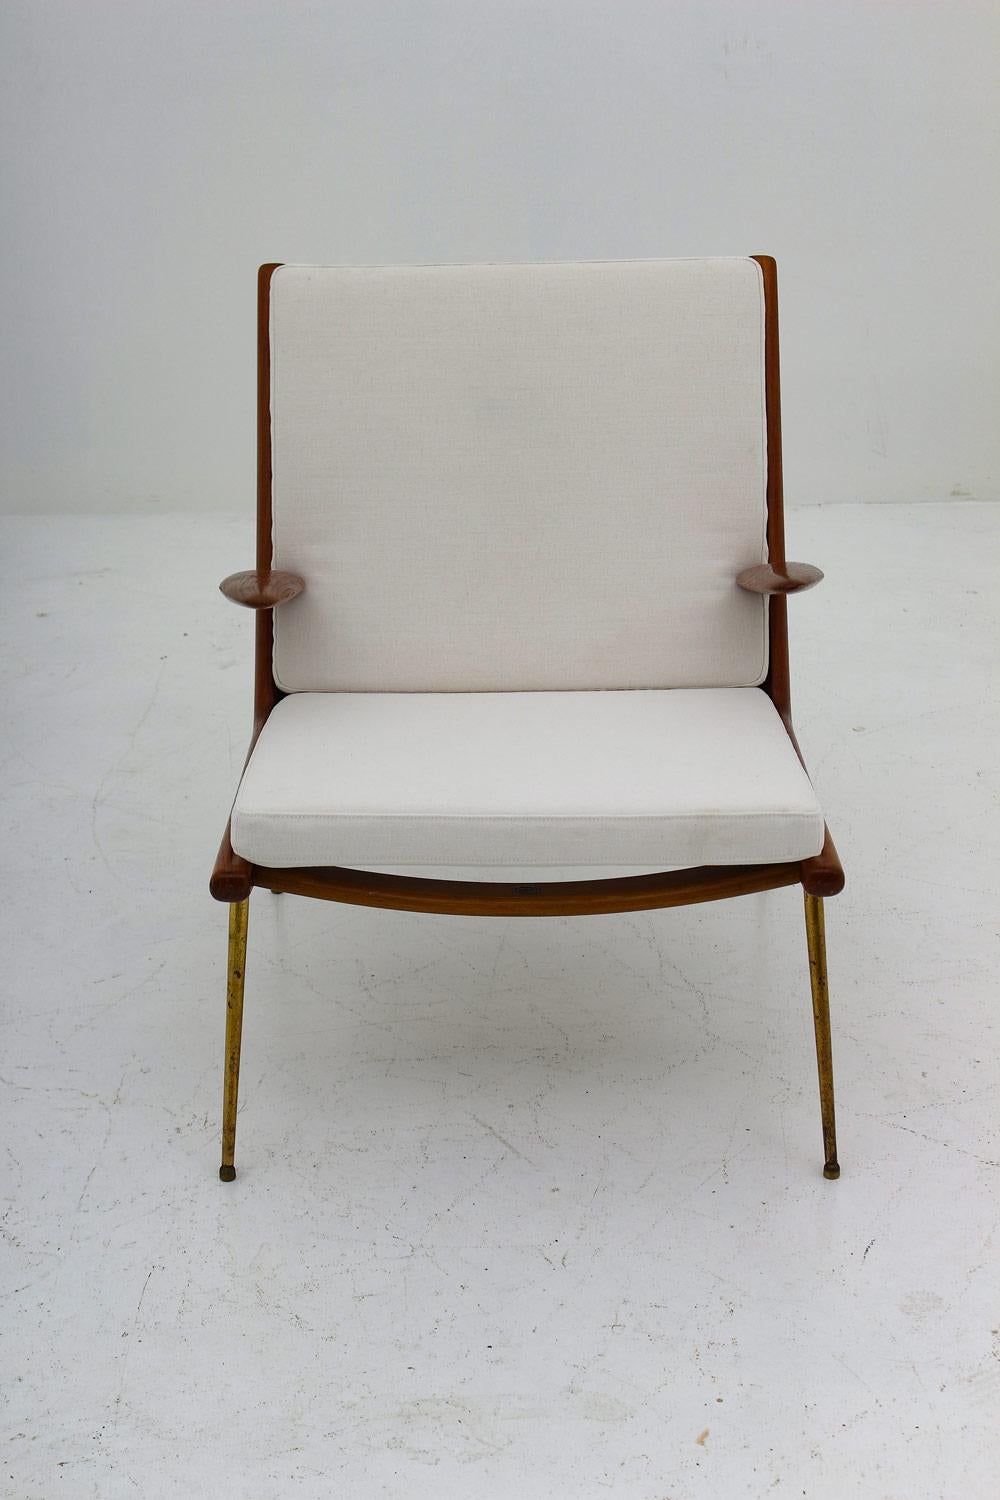 20th Century Scandinavian Lounge Chair FD135 by Peter Hvidt & Orla Mølgaard-Nielsen